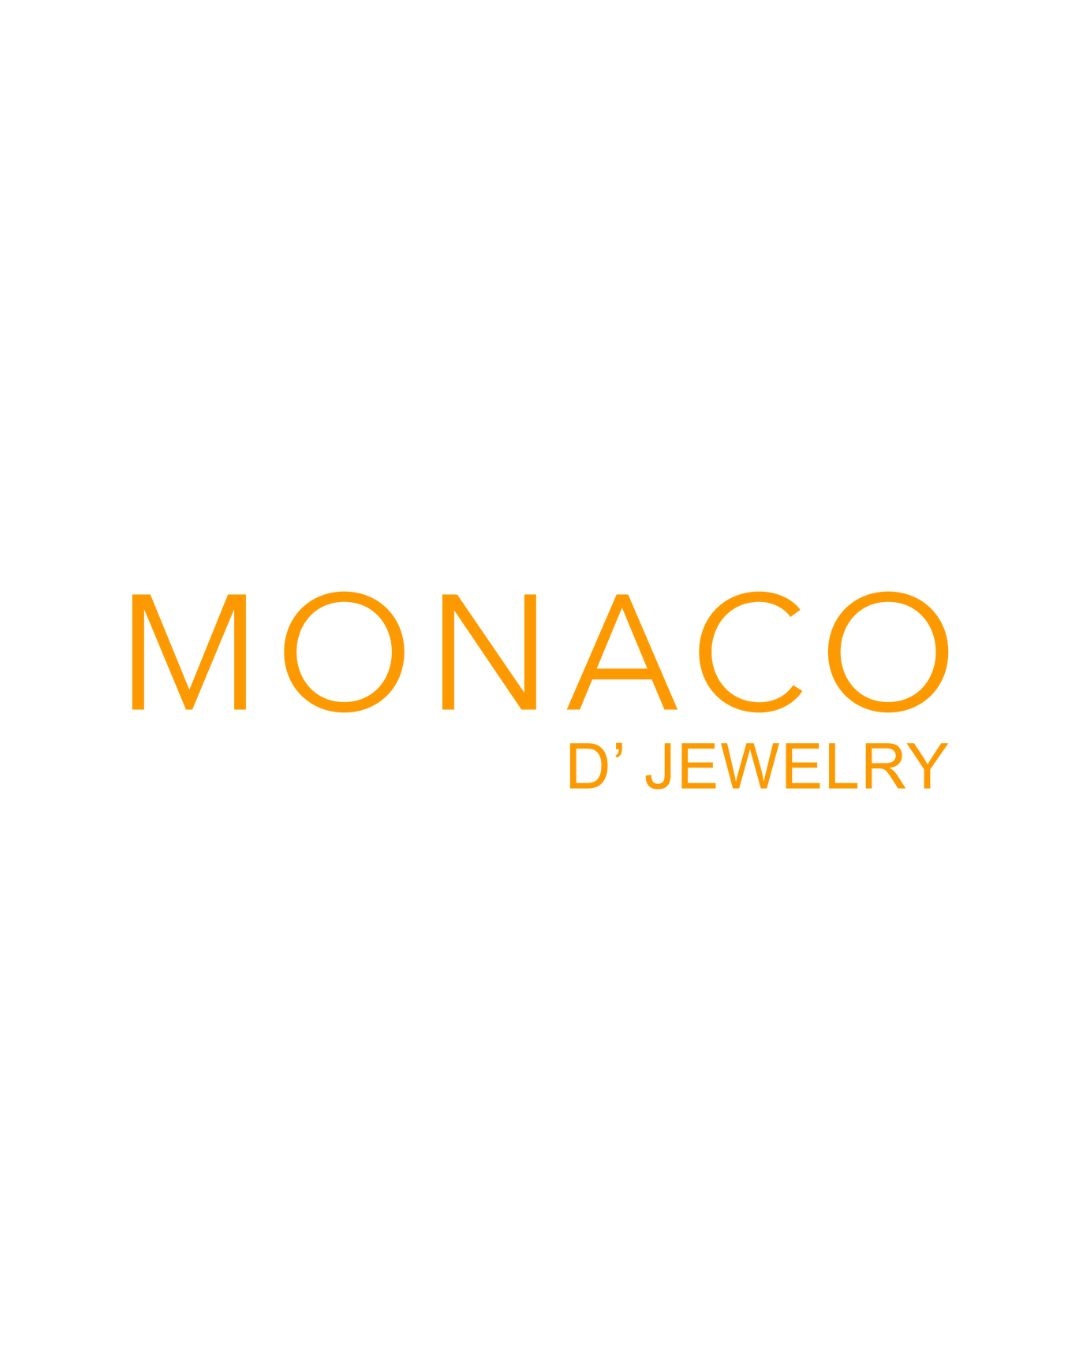 Monaco-D-Jewelry-logo.jpg